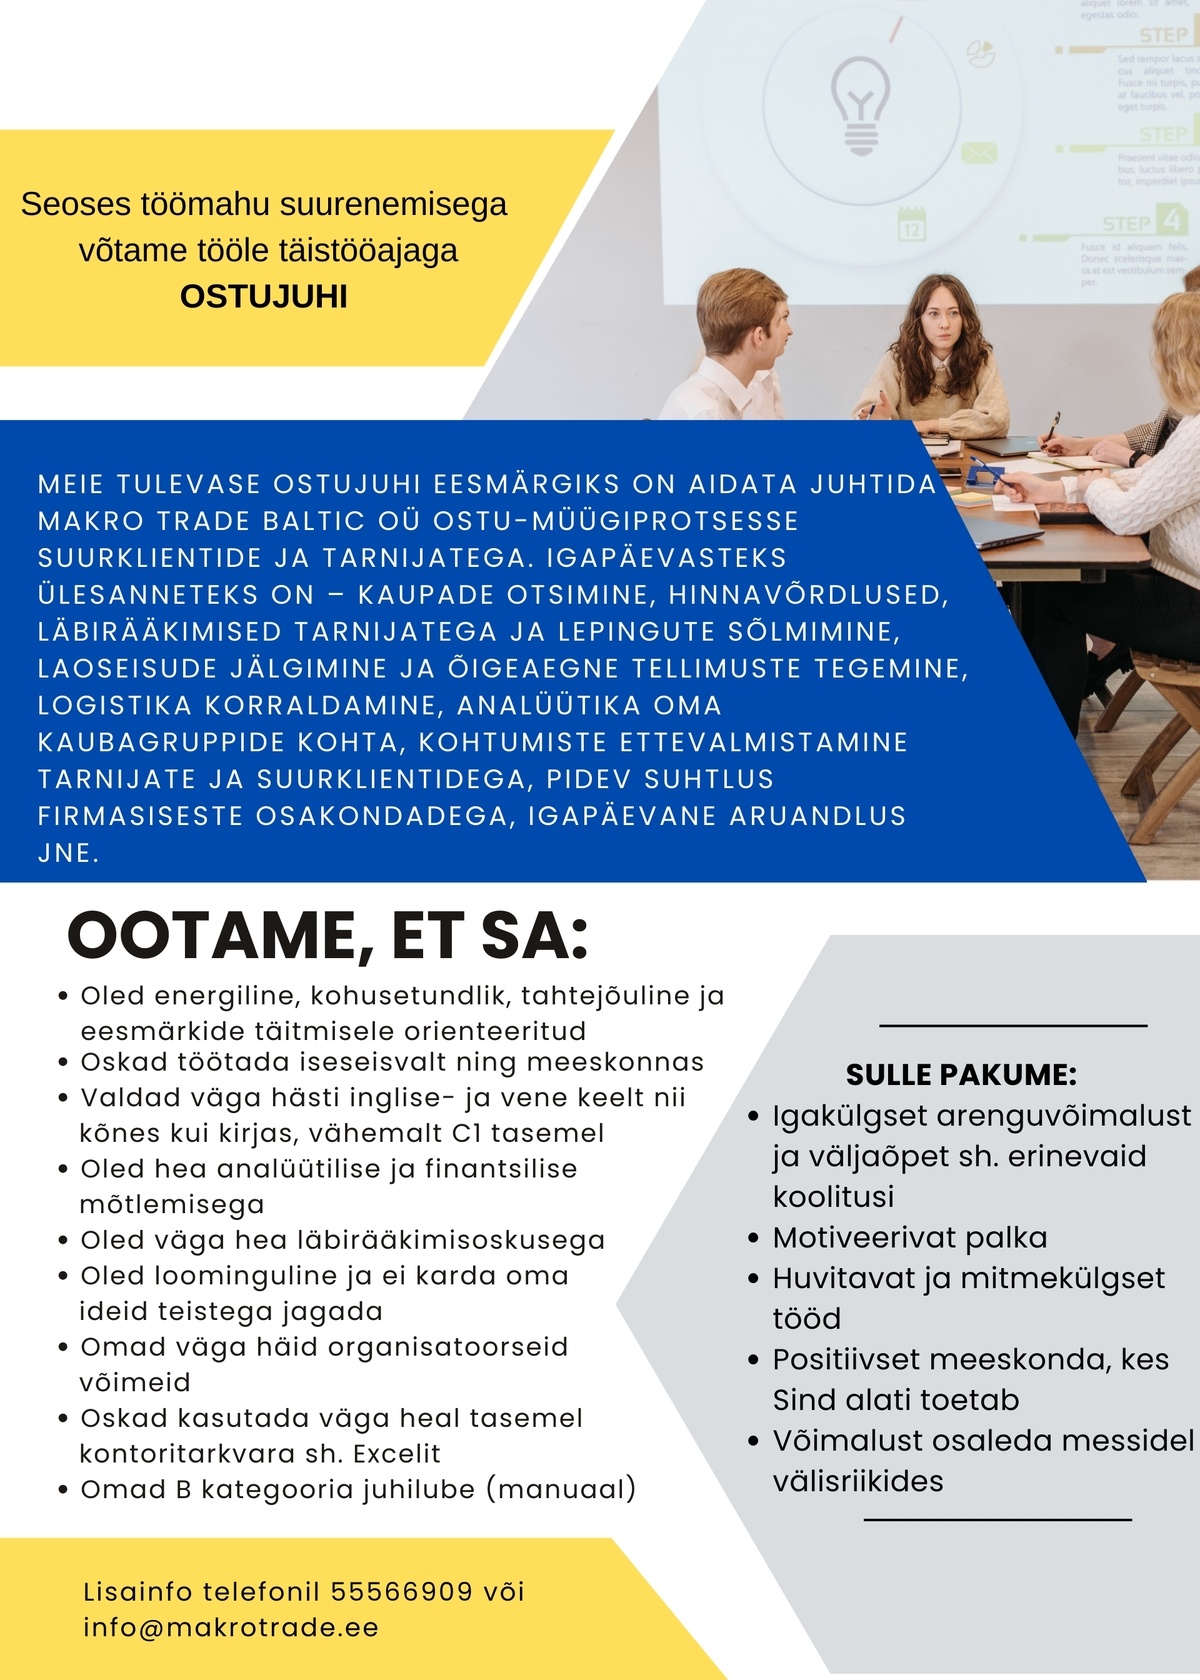 Makro Trade Baltic OÜ Ostujuht - Tartu